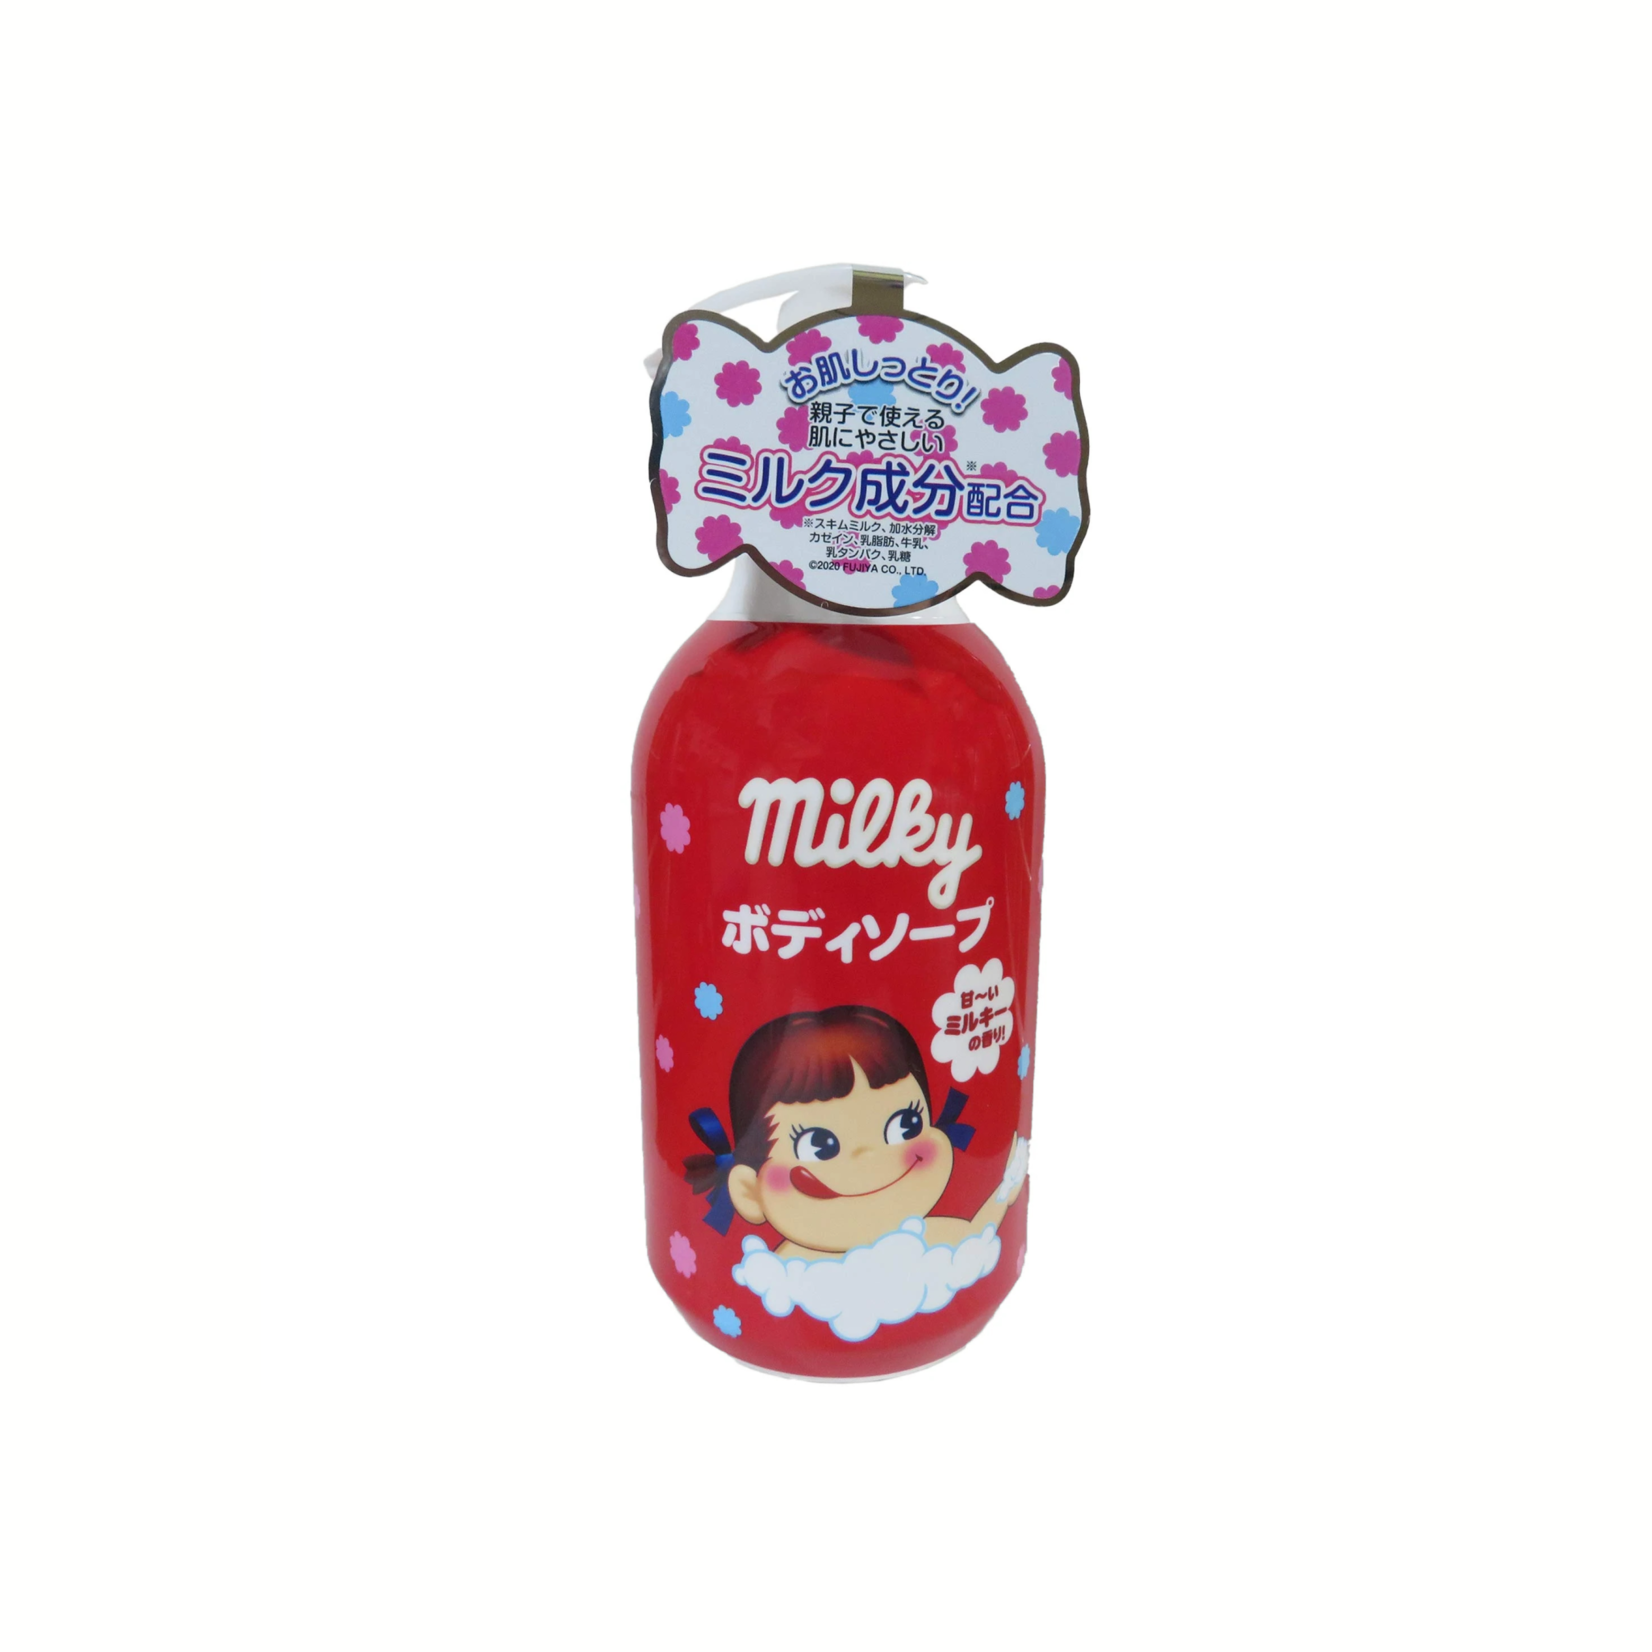 Fujiya Milky Body Soap Milk Candy Scent 450ml